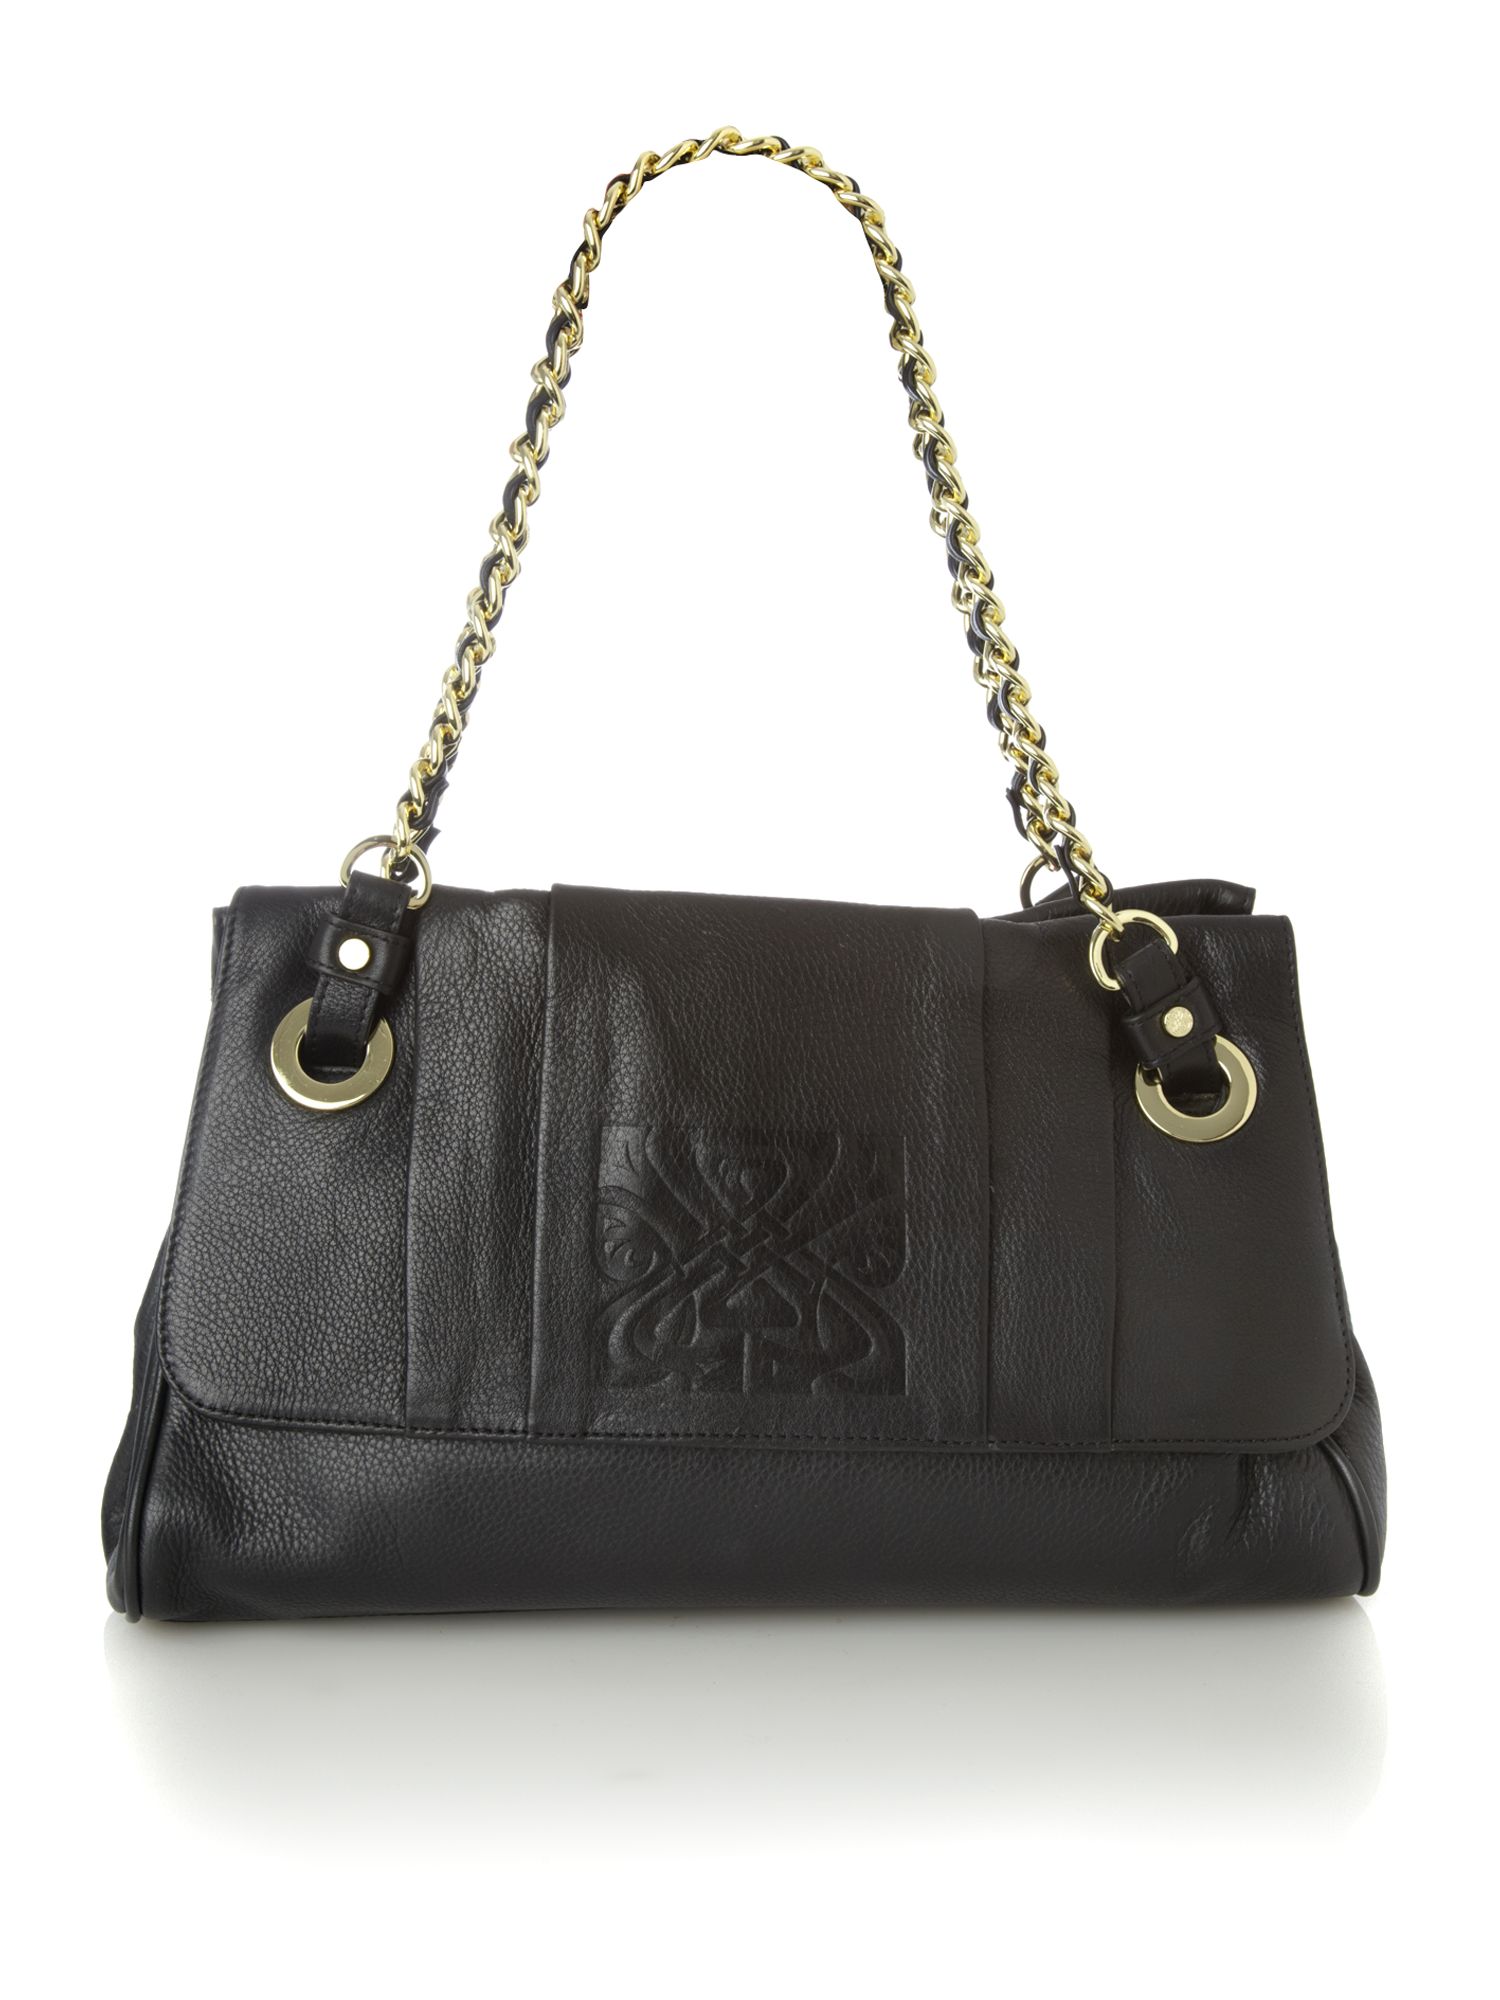 Biba Eleanor Leather Chain Handle Bag in Black - Lyst